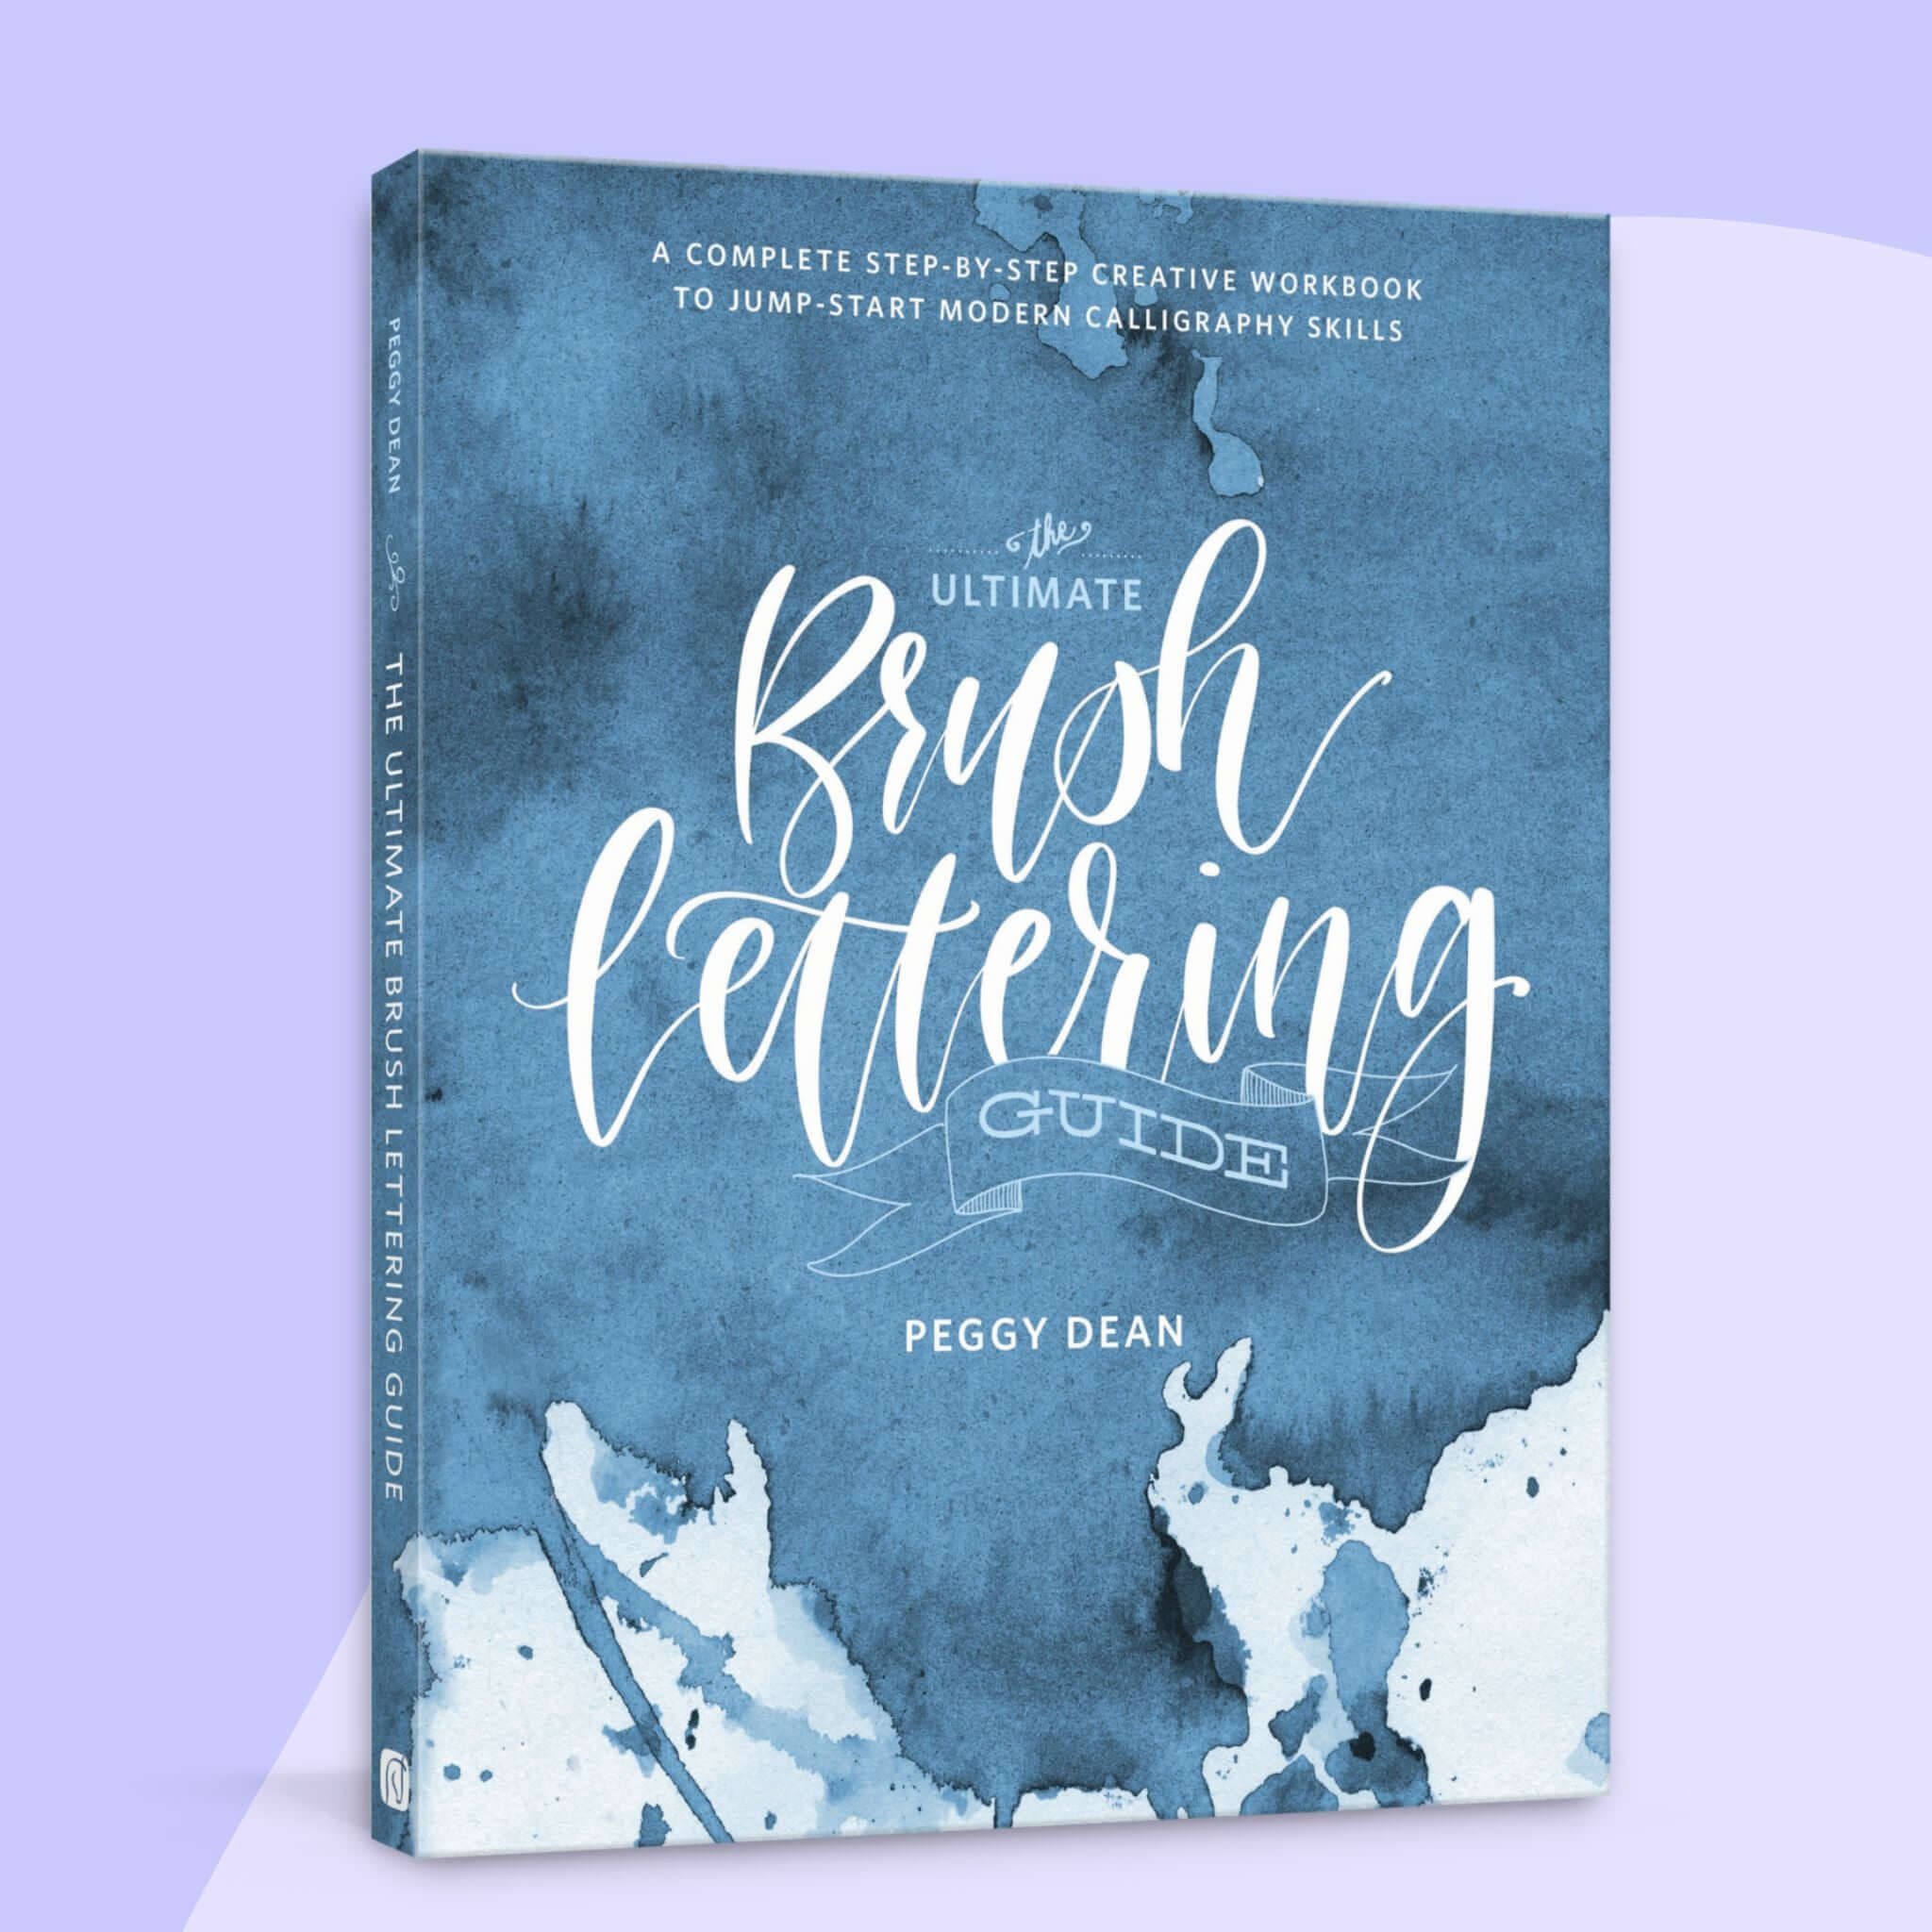 Ultimate Brush Lettering Guide book